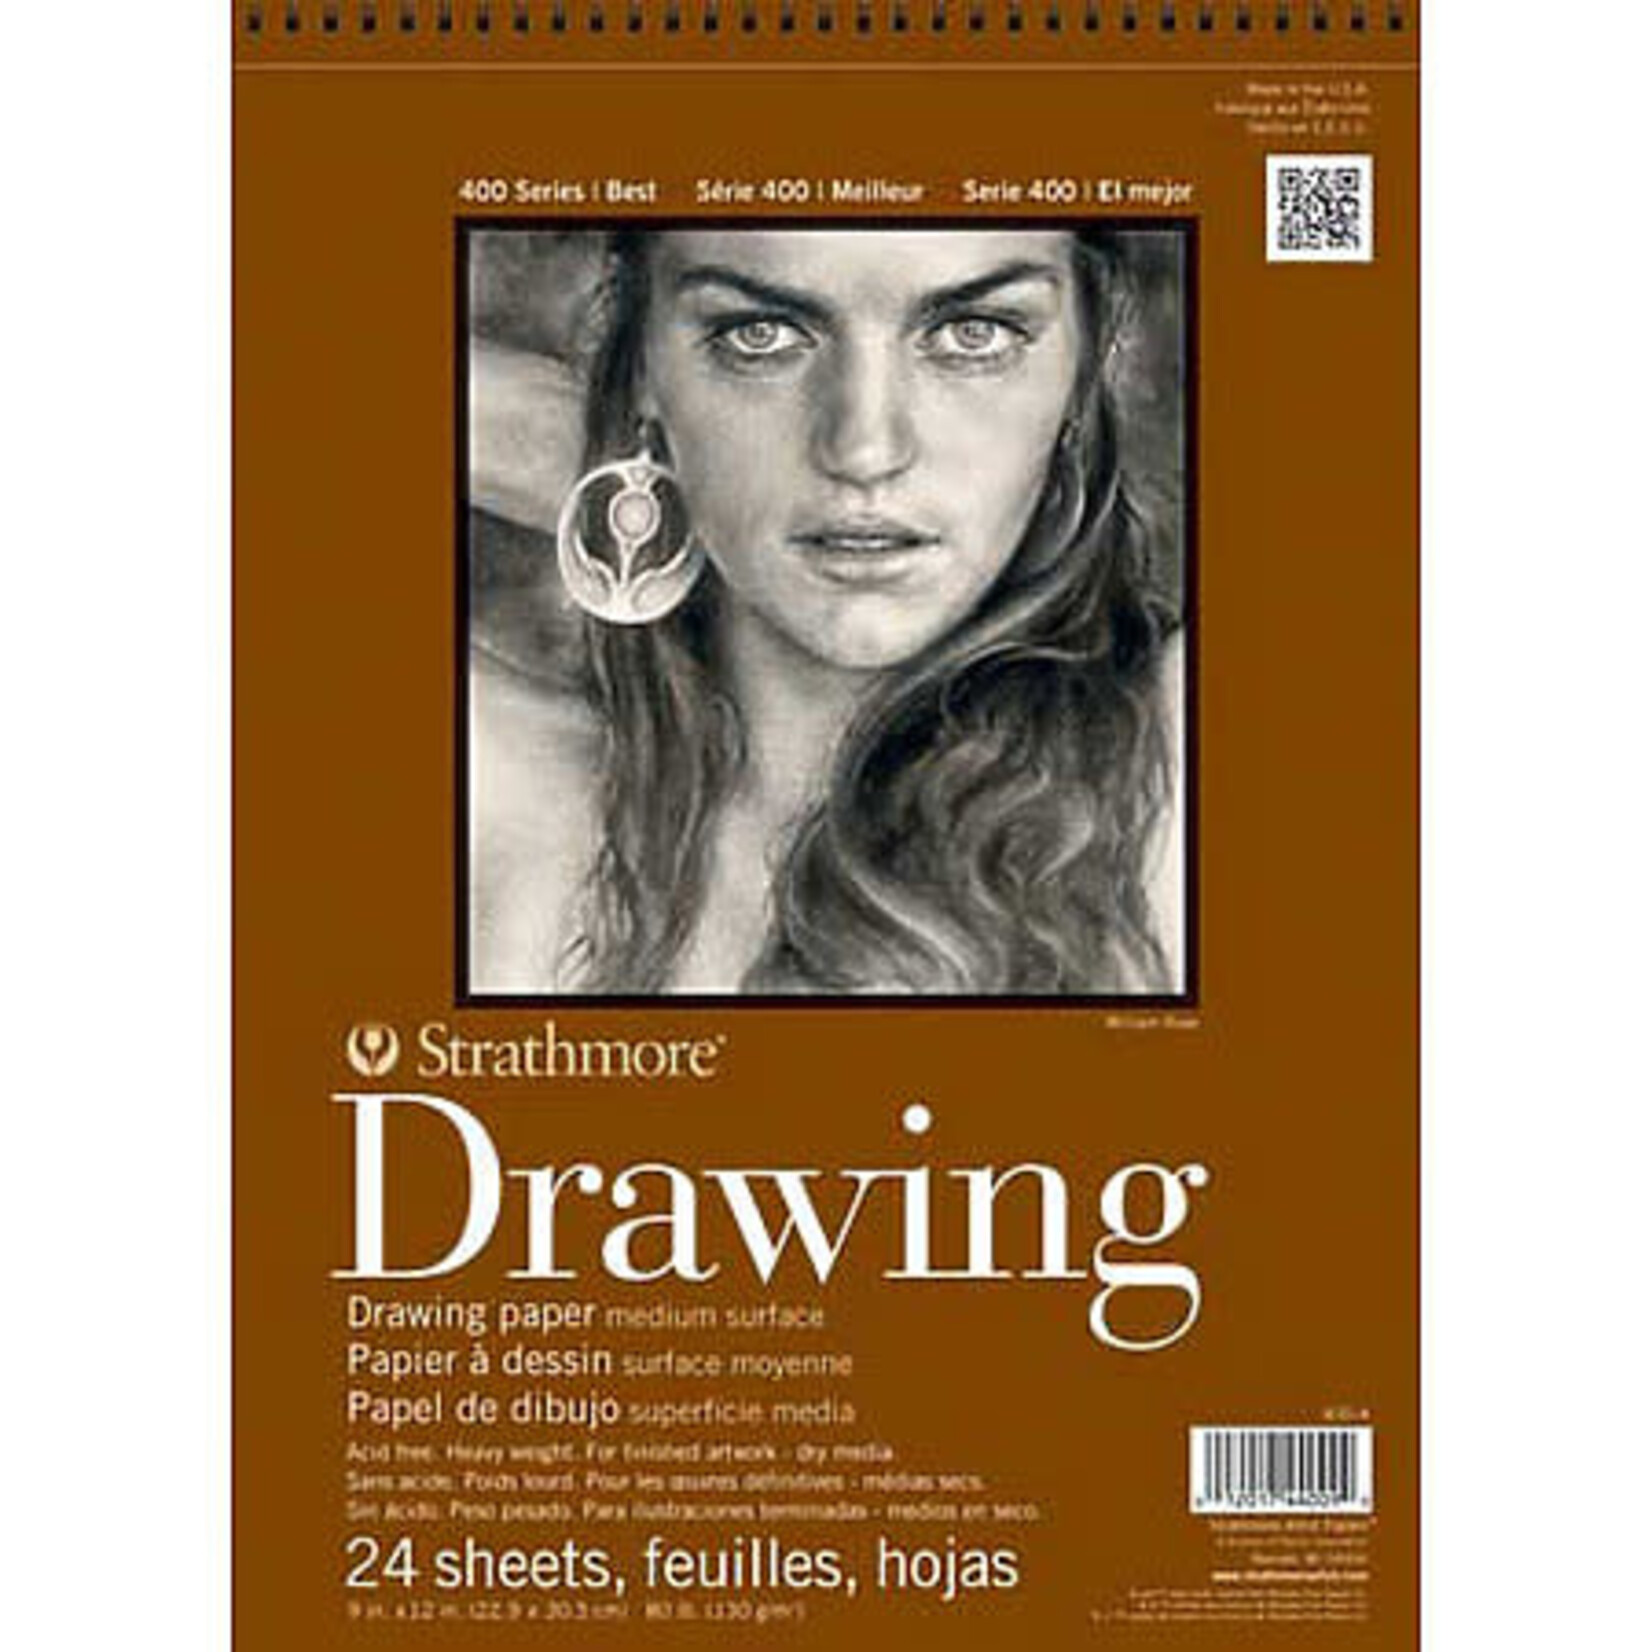 Strathmore Drawing Pads 400 Series, Medium Surface, 6 X 8